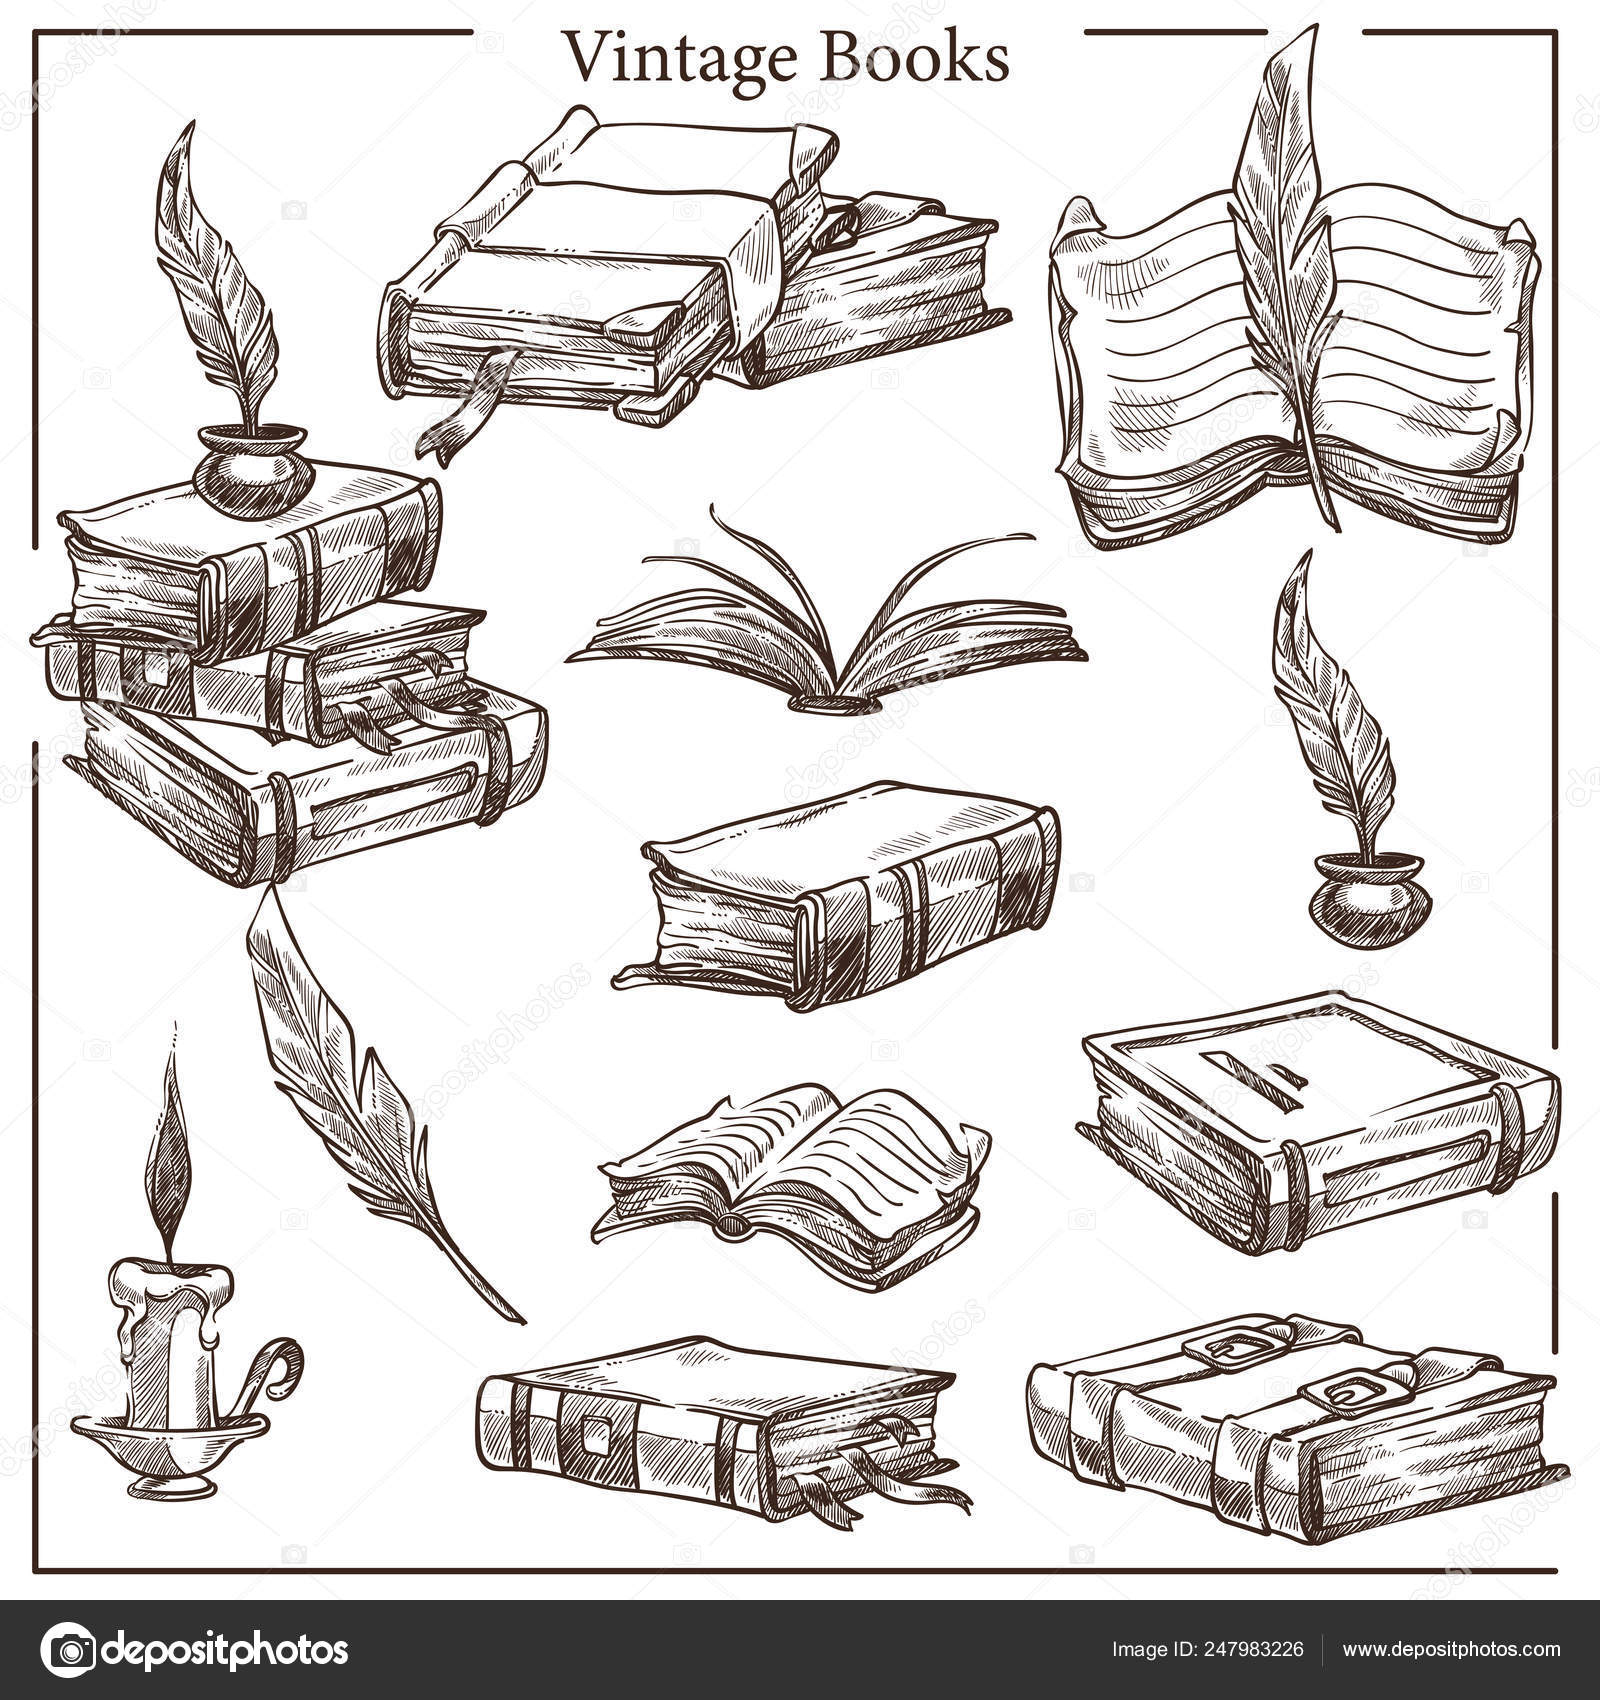 https://st4.depositphotos.com/1028367/24798/v/1600/depositphotos_247983226-stock-illustration-literature-vintage-books-isolated-sketches.jpg